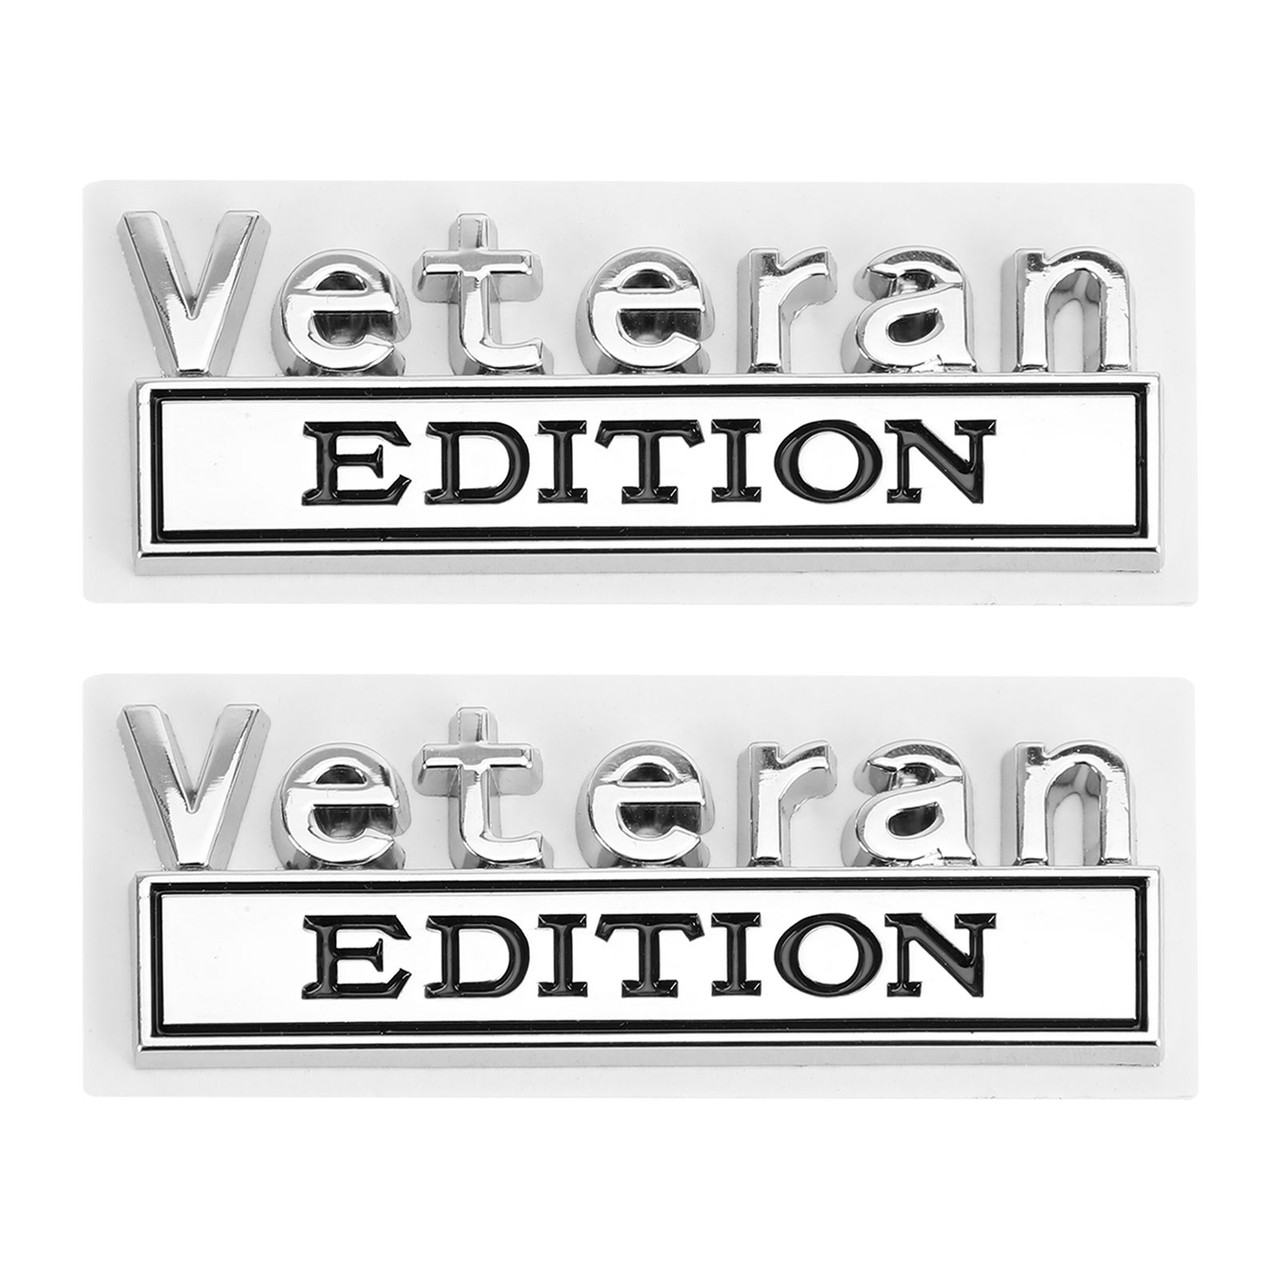 2pcs VETERAN Edition Emblem Badge Car Truck Rear Tailgate Sticker Decal Alloy Silver Black